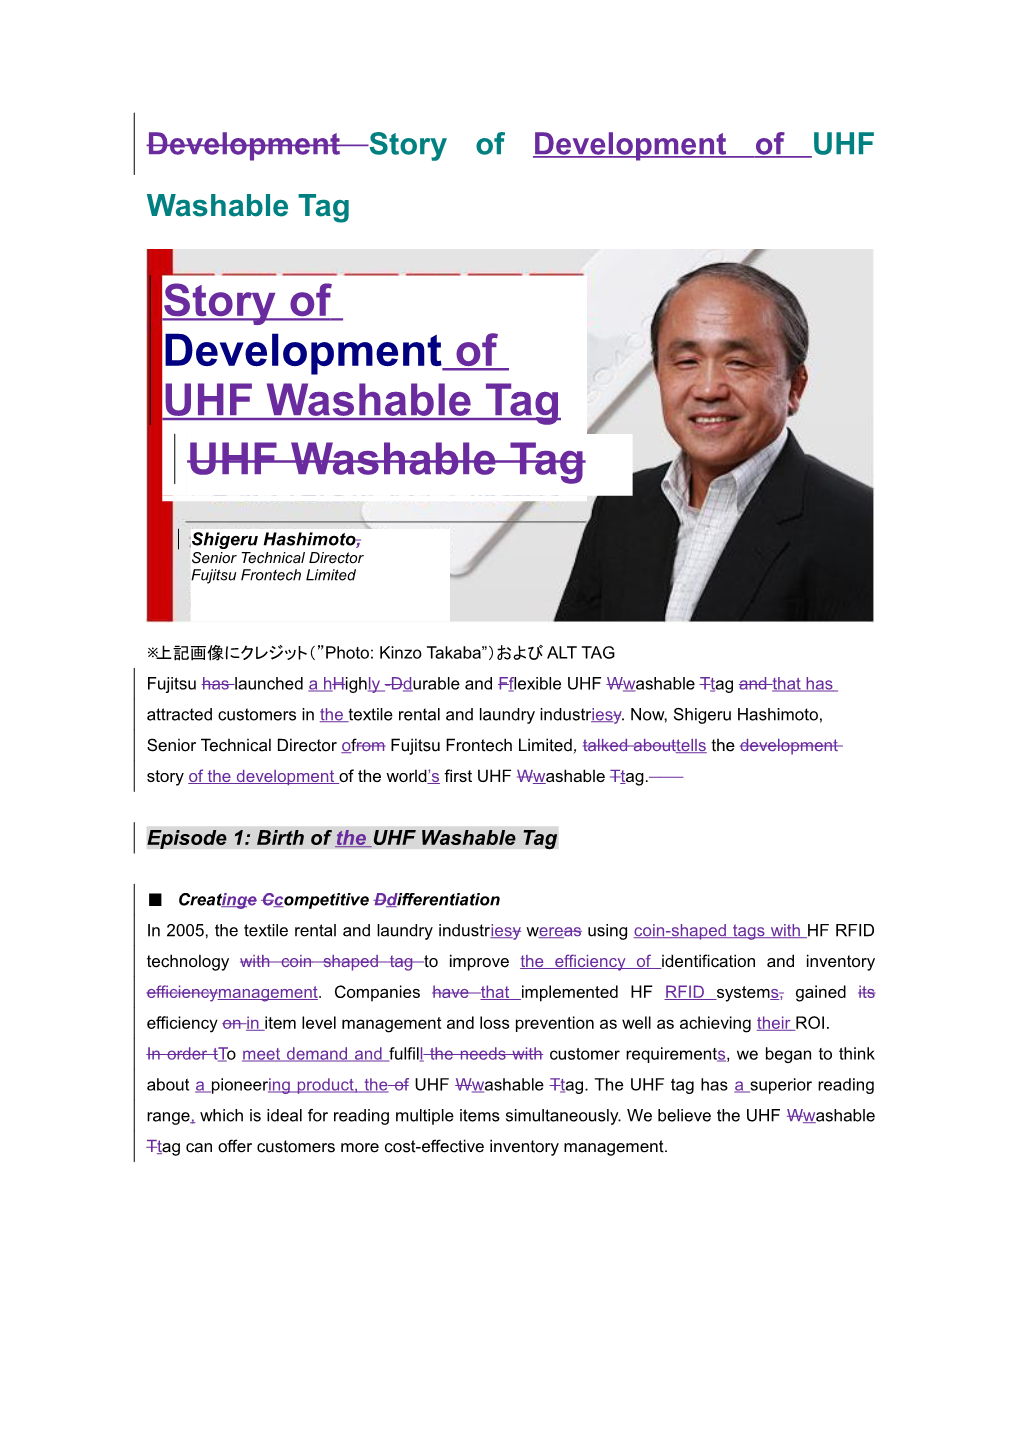 Development Story of Development of UHF Washable Tag